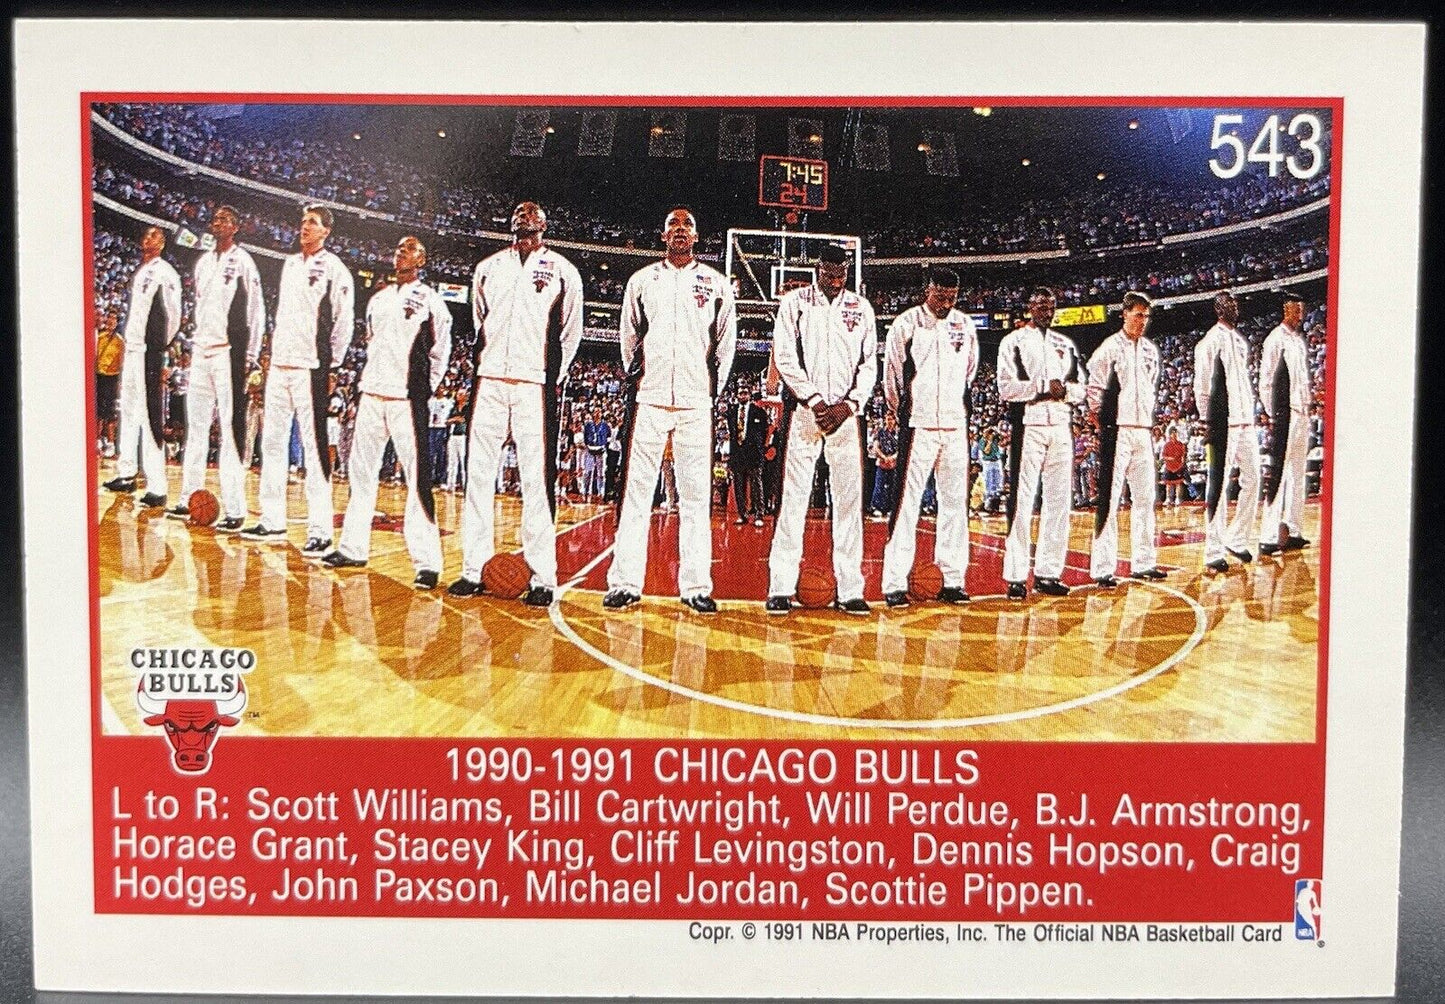 1991 NBA Hoops #543 Michael Jordan 1991 NBA Champions Chicago Bulls